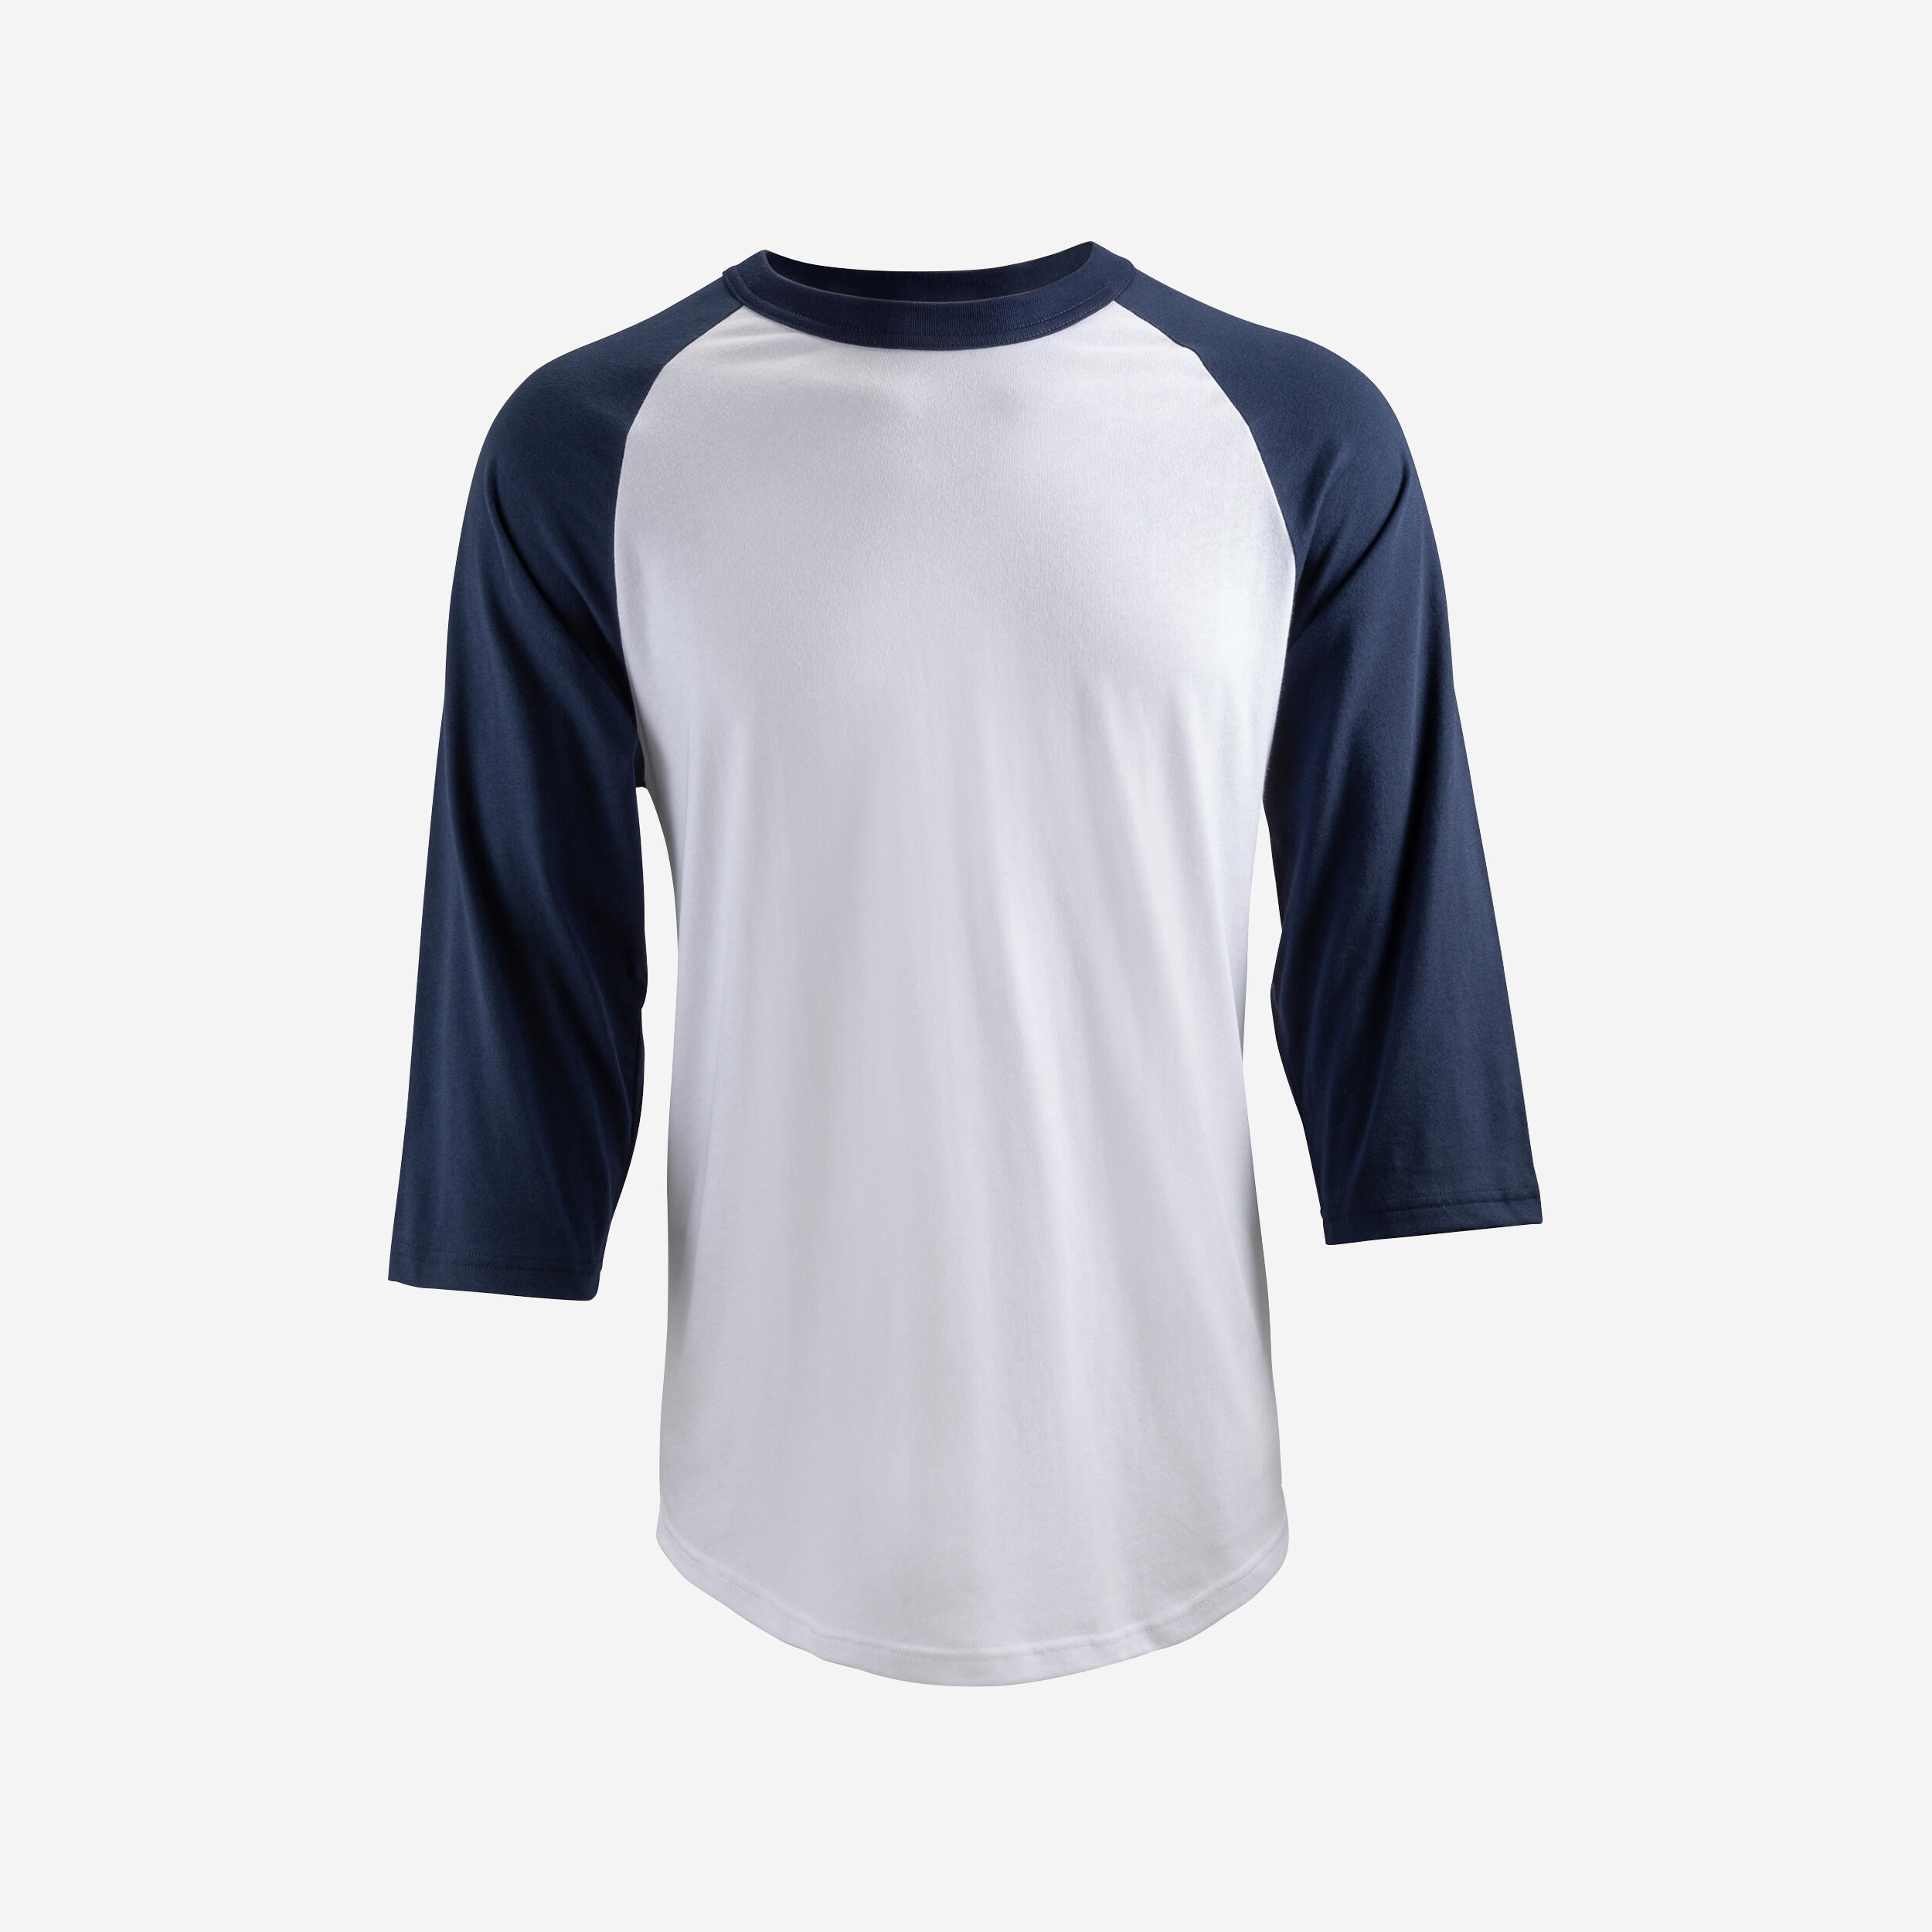 Decathlon | T-shirt baseball uomo BA 550 bianco-blu |  Kipsta